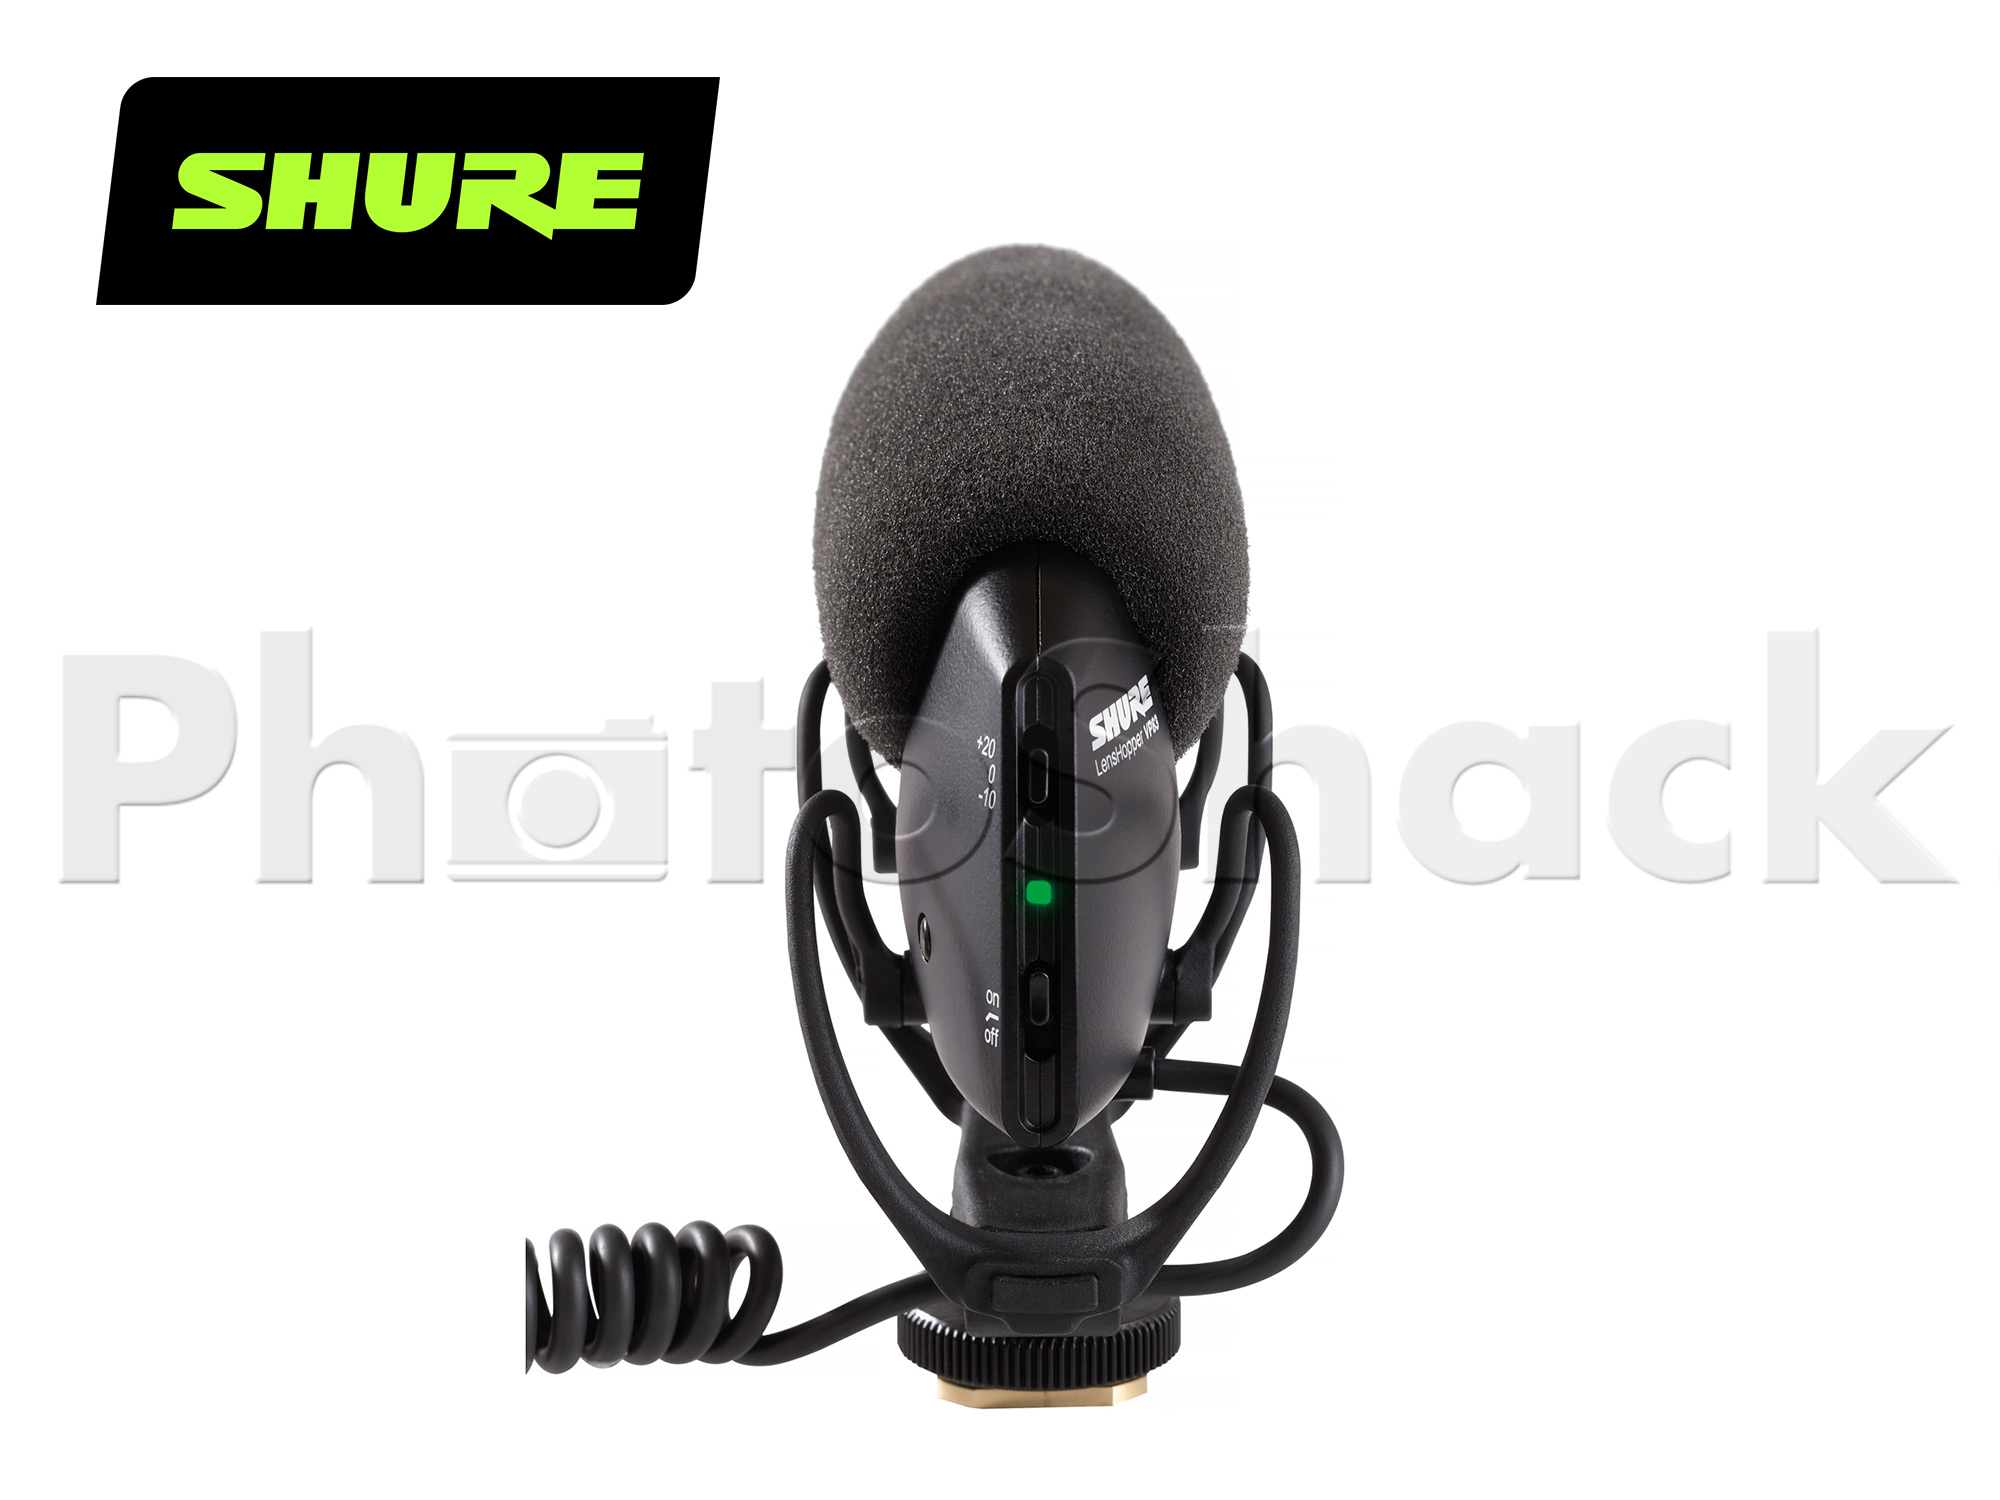 Shure VP83 Camera-Mount Condenser Microphone